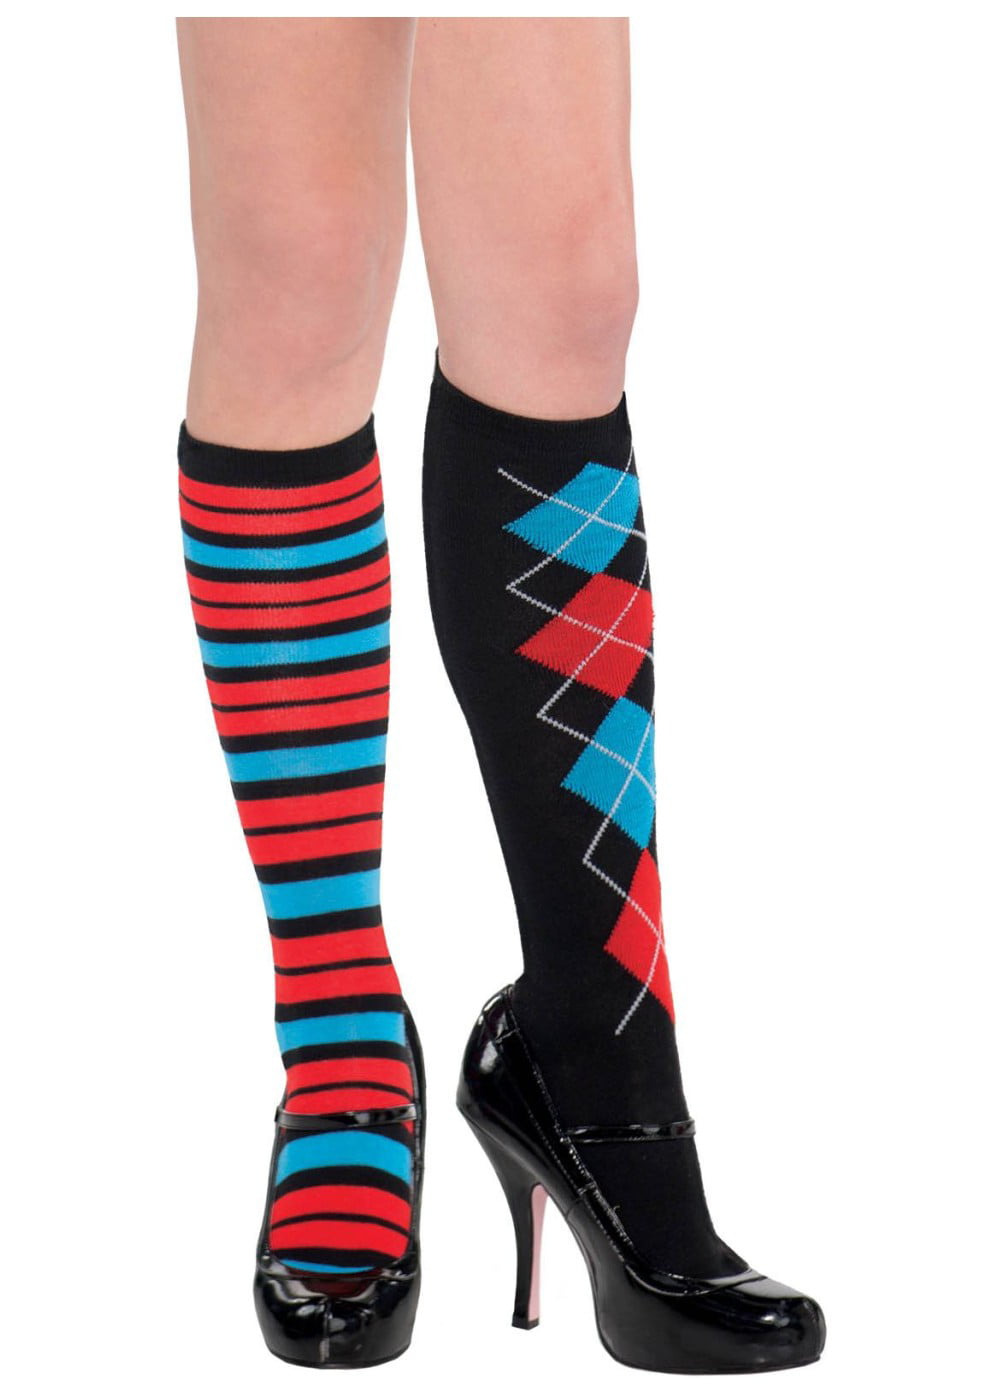 Geek Chic Nerd Women Socks - Walmart.com